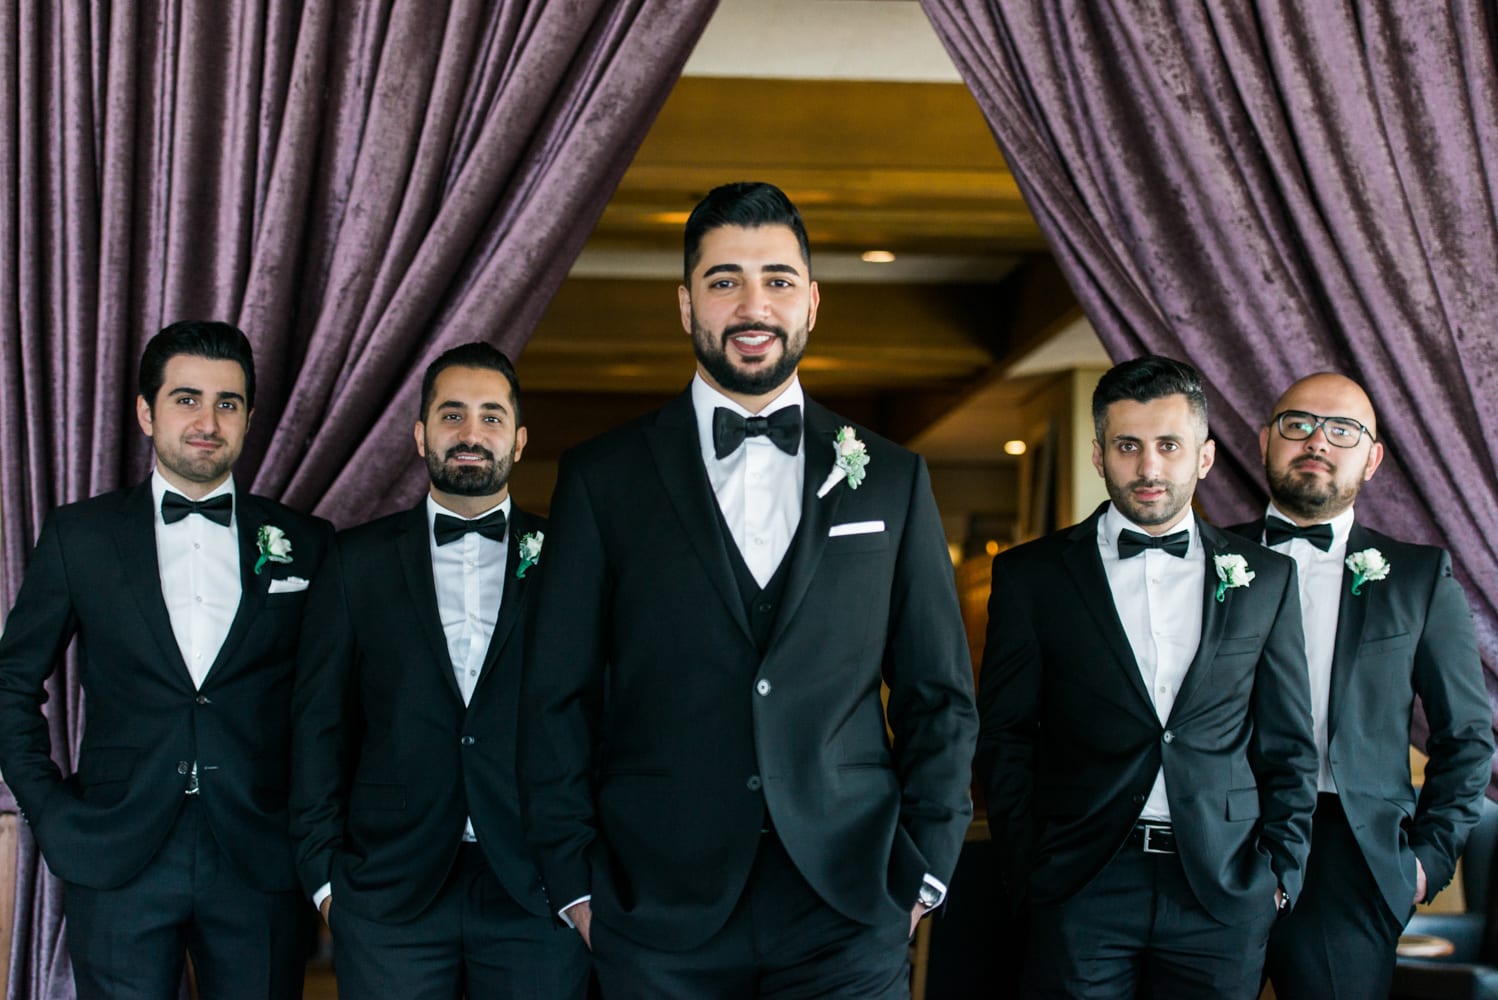 A Vintage Persian Wedding in Vancouver - Groom and groomsmen